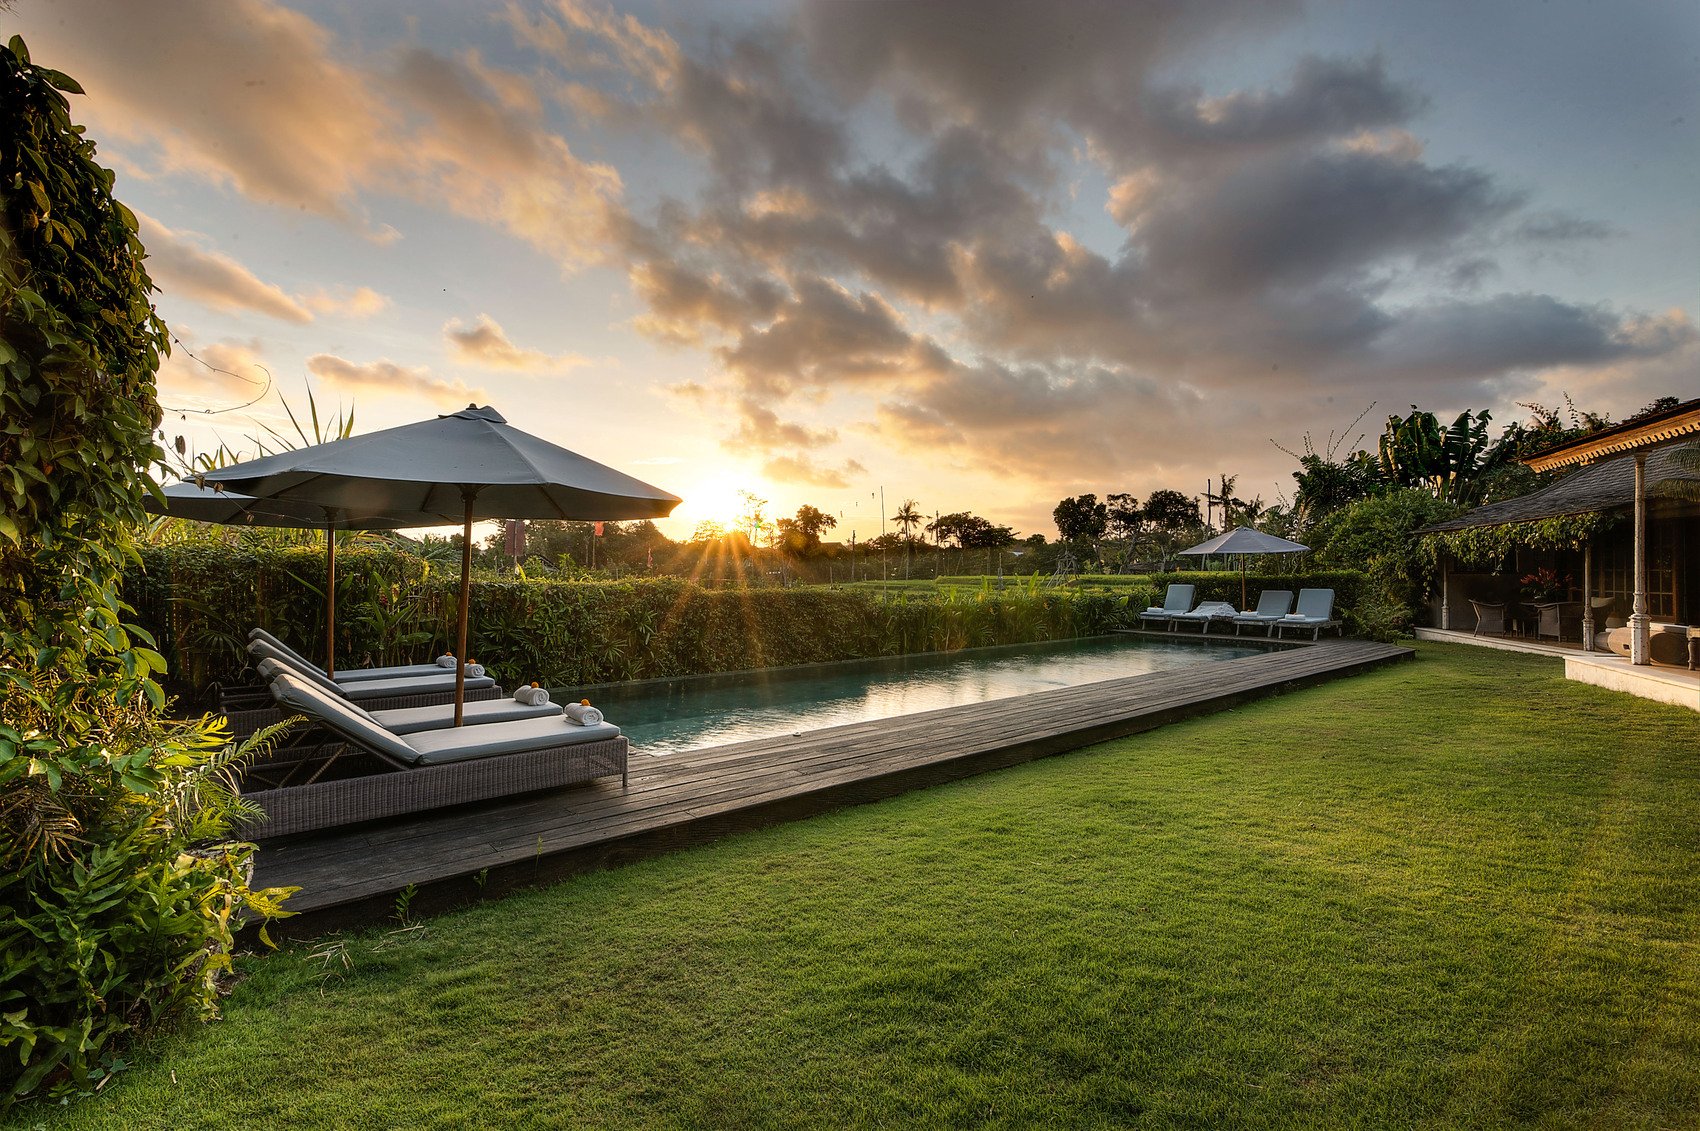 Villa Artis - luxury villa Bali - 5* design hotel Bali - room with a view